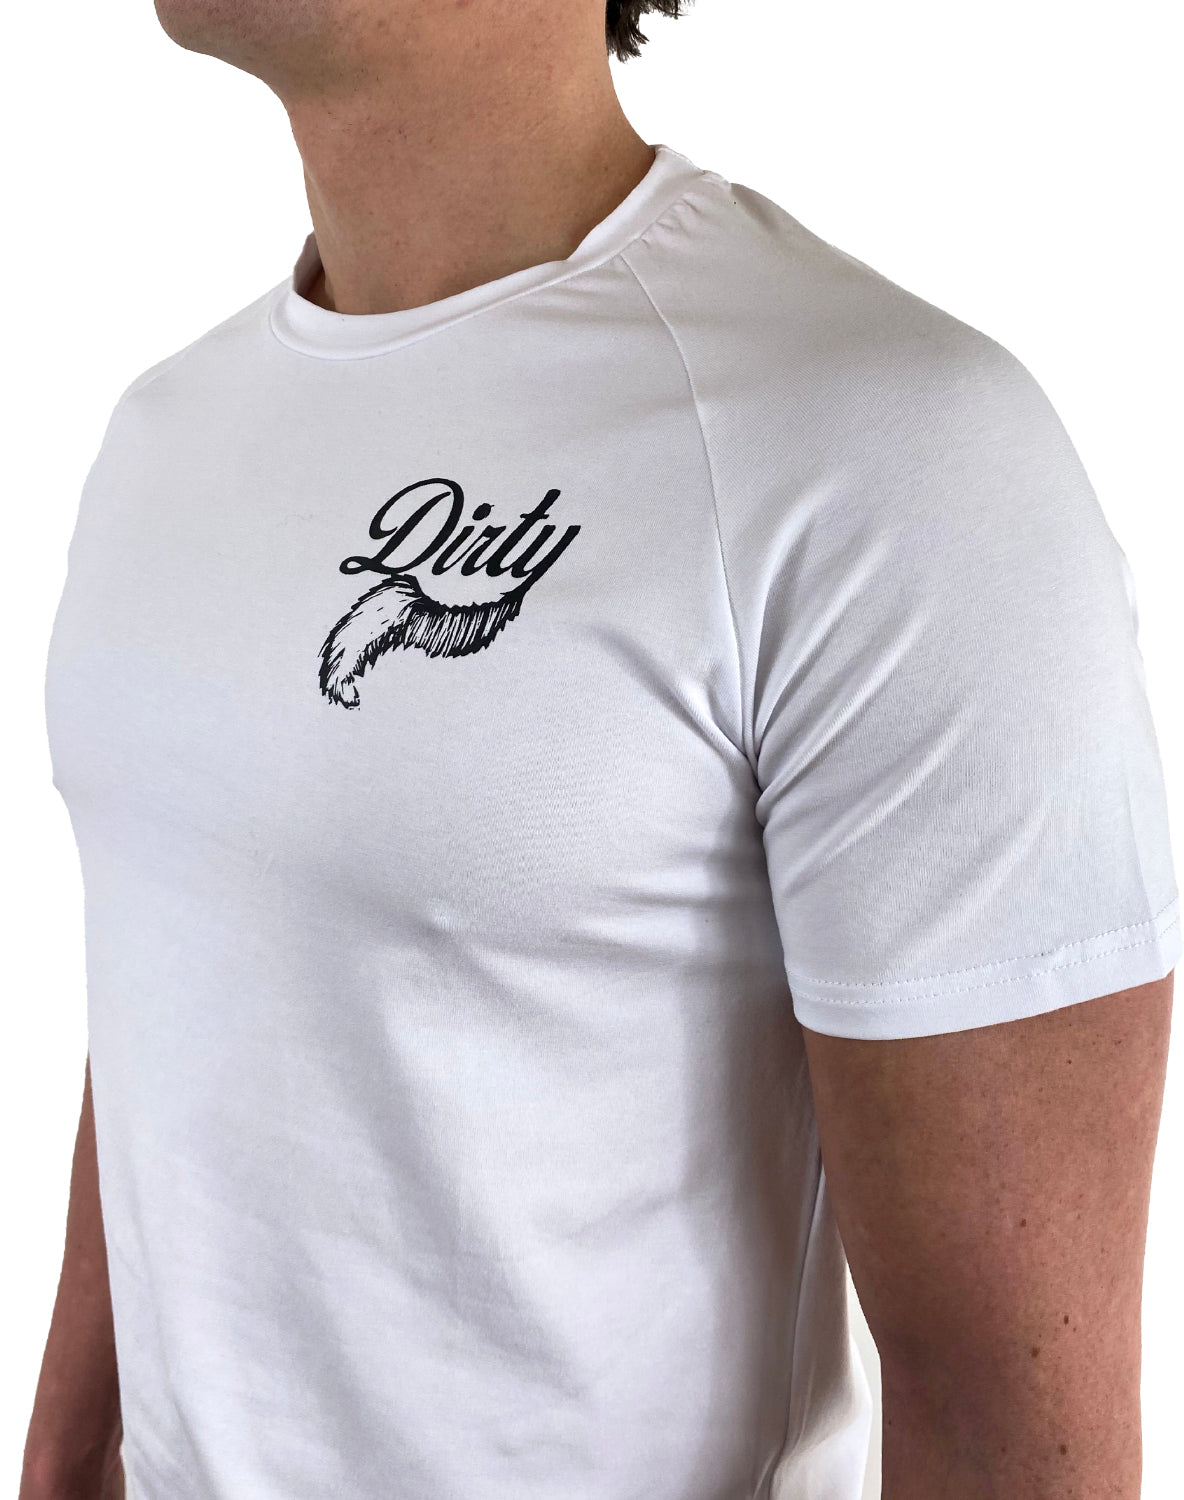 Dirty T-Shirt - Small Logo